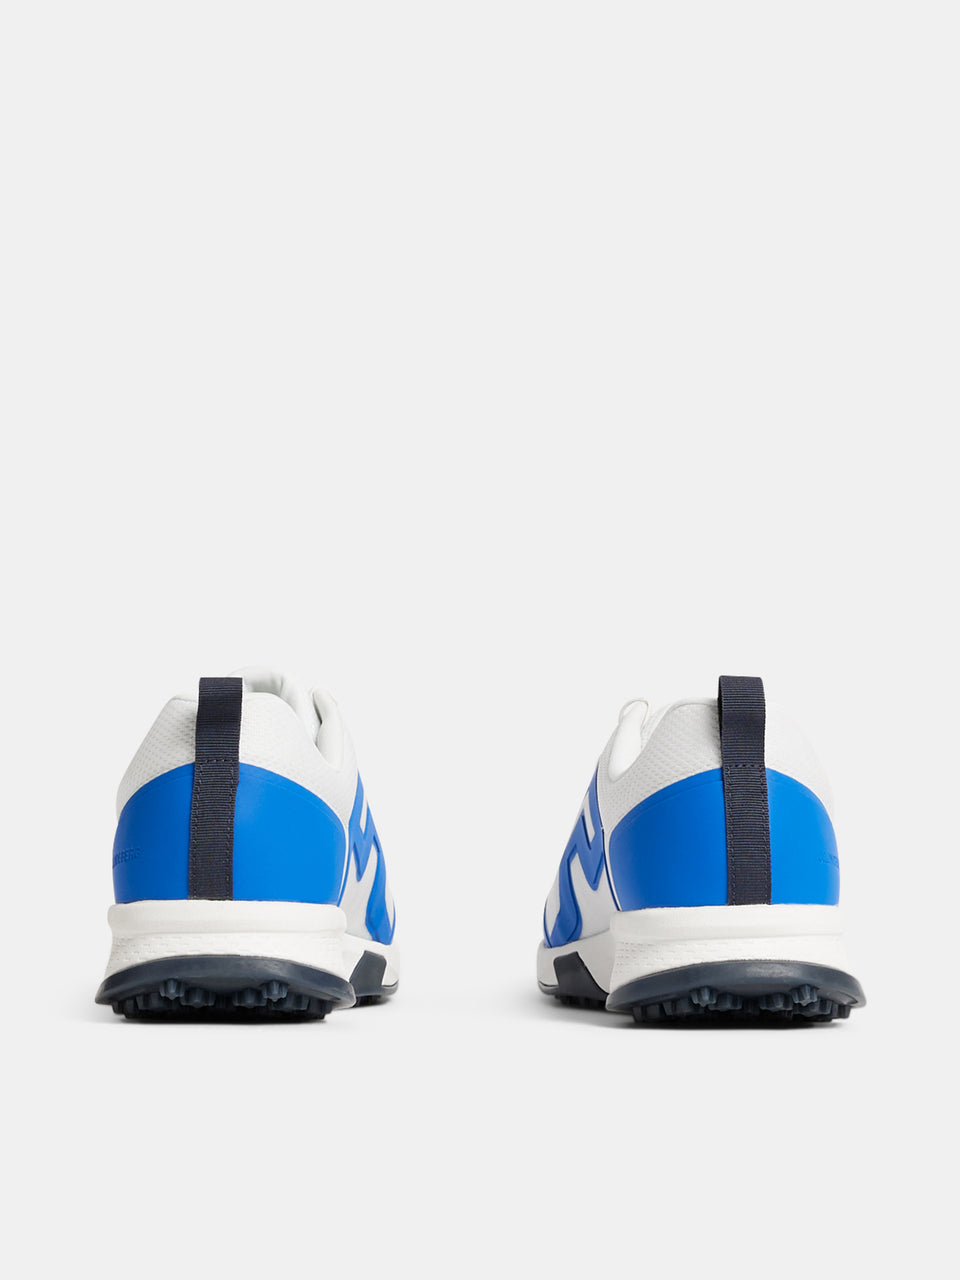 Range Finder Golf Sneaker / Nautical Blue